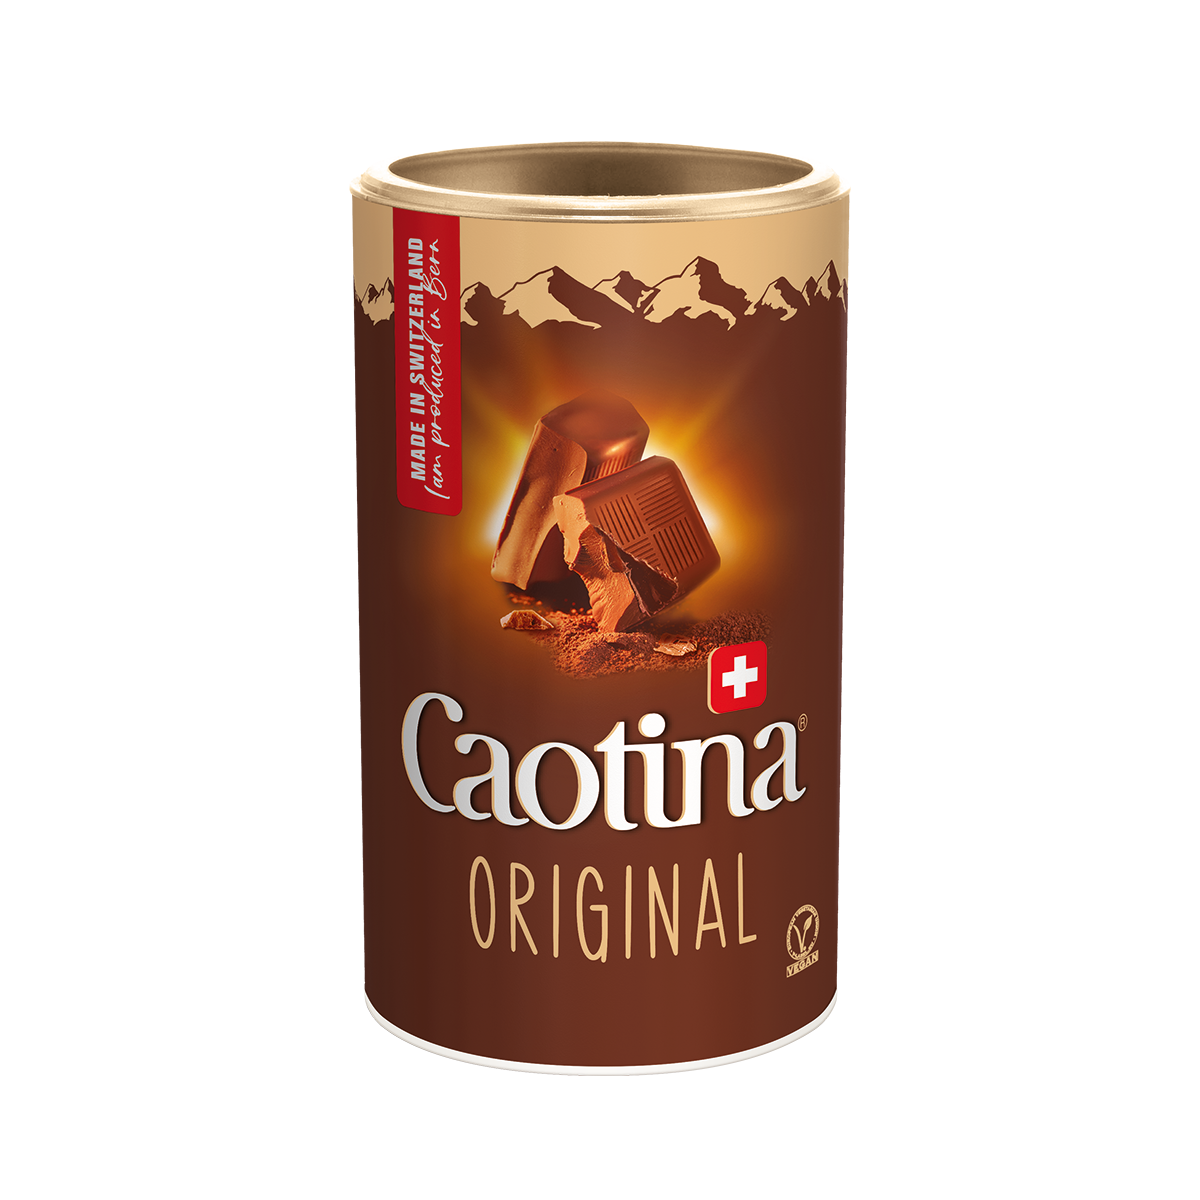  Caotina Original - Kakaopulver aus Schweizer Schokolade